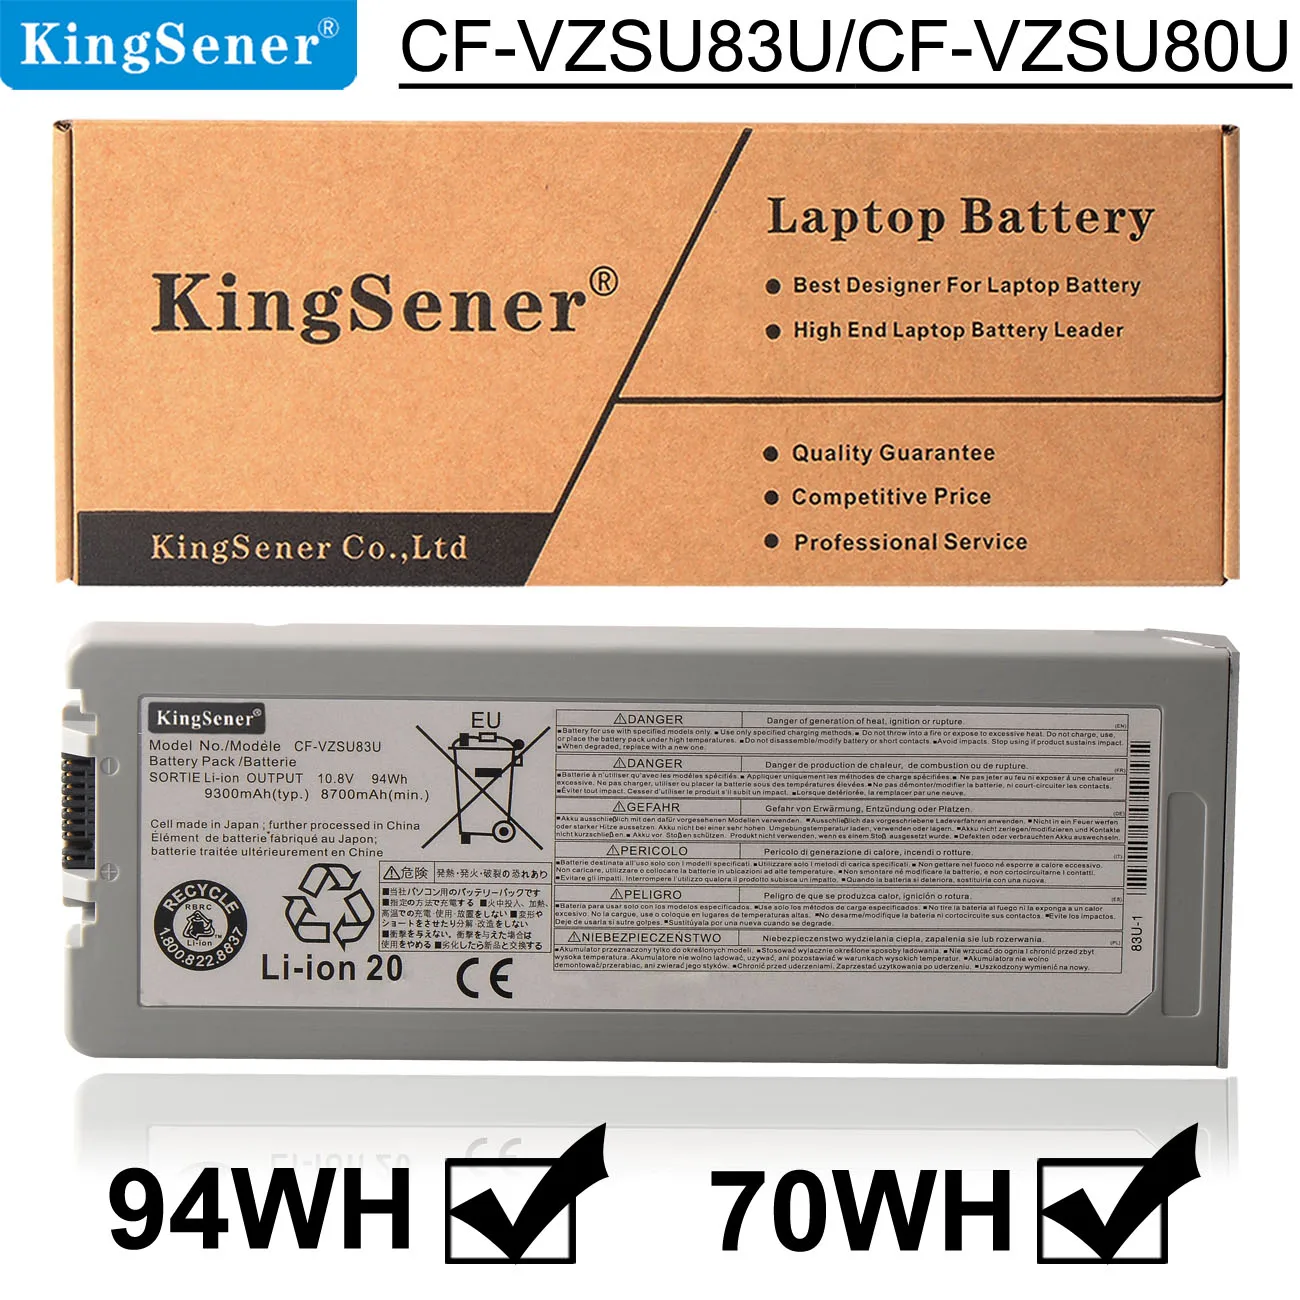 

KingSener 10.8V 70Wh CF-VZSU80U CF-VZSU82U CF-VZSU83U Laptop Battery For Panasonic Toughbook CF-C2 Series Notebook 94WH